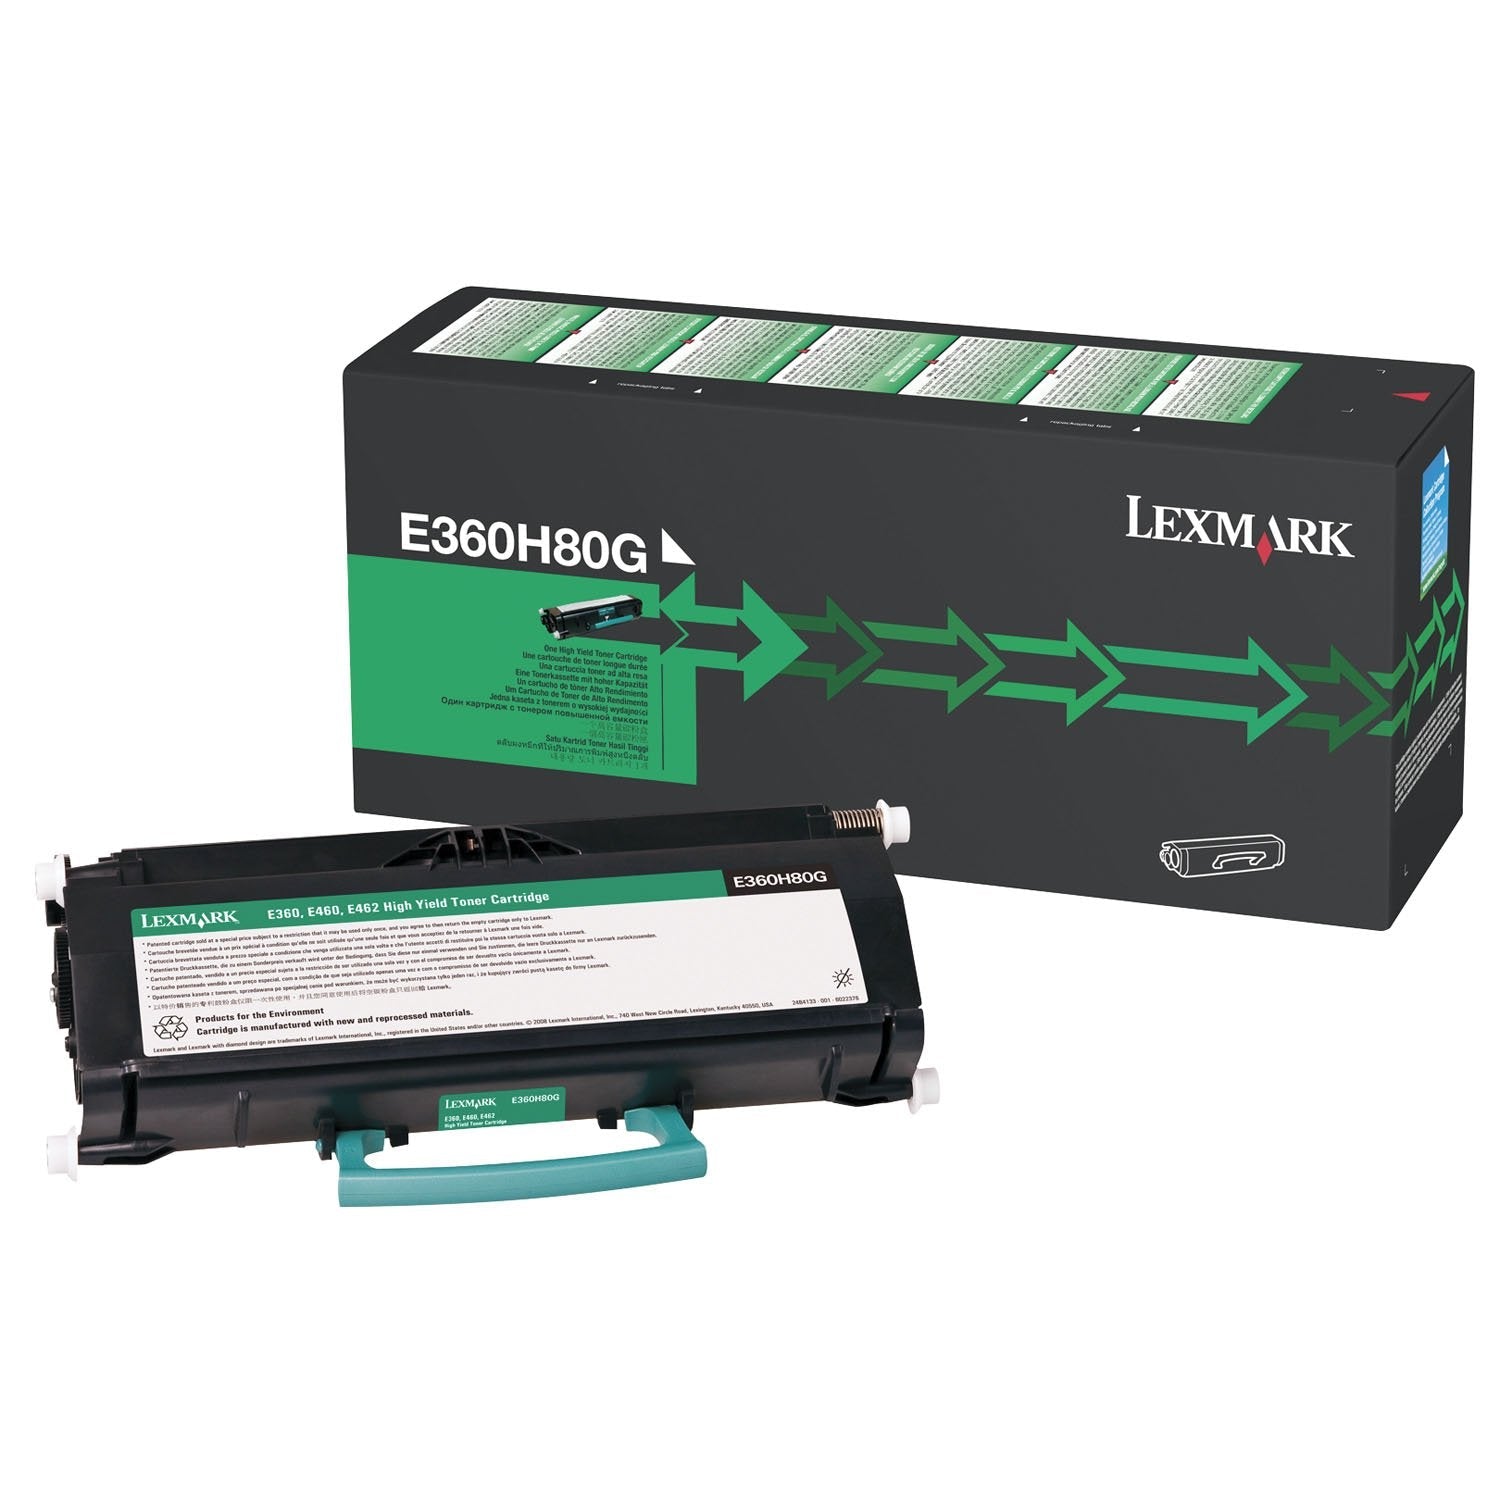 Absolute Toner Lexmark E360H80G Original Genuine OEM High Yield Black Toner Cartridge Original Lexmark Cartridges